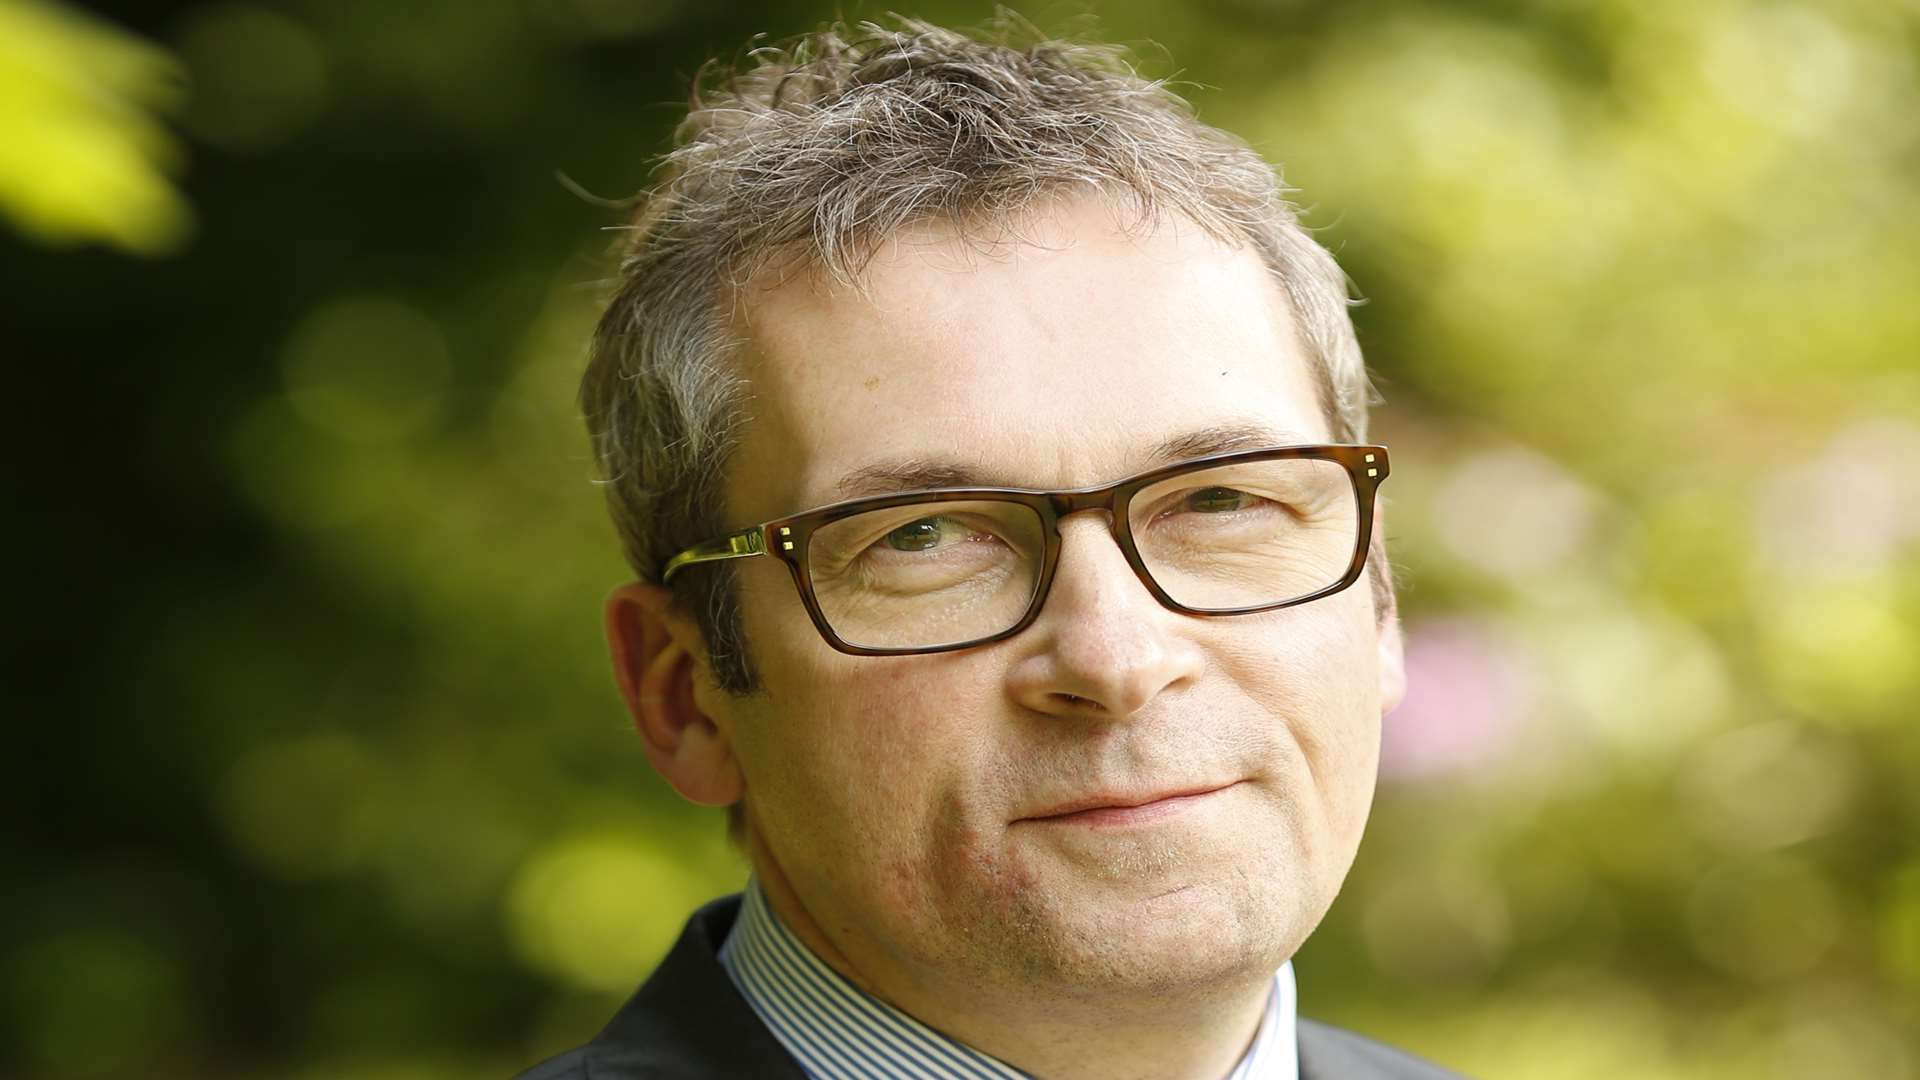 Ian Bauckham is executive head of the Tenax Schools Trust